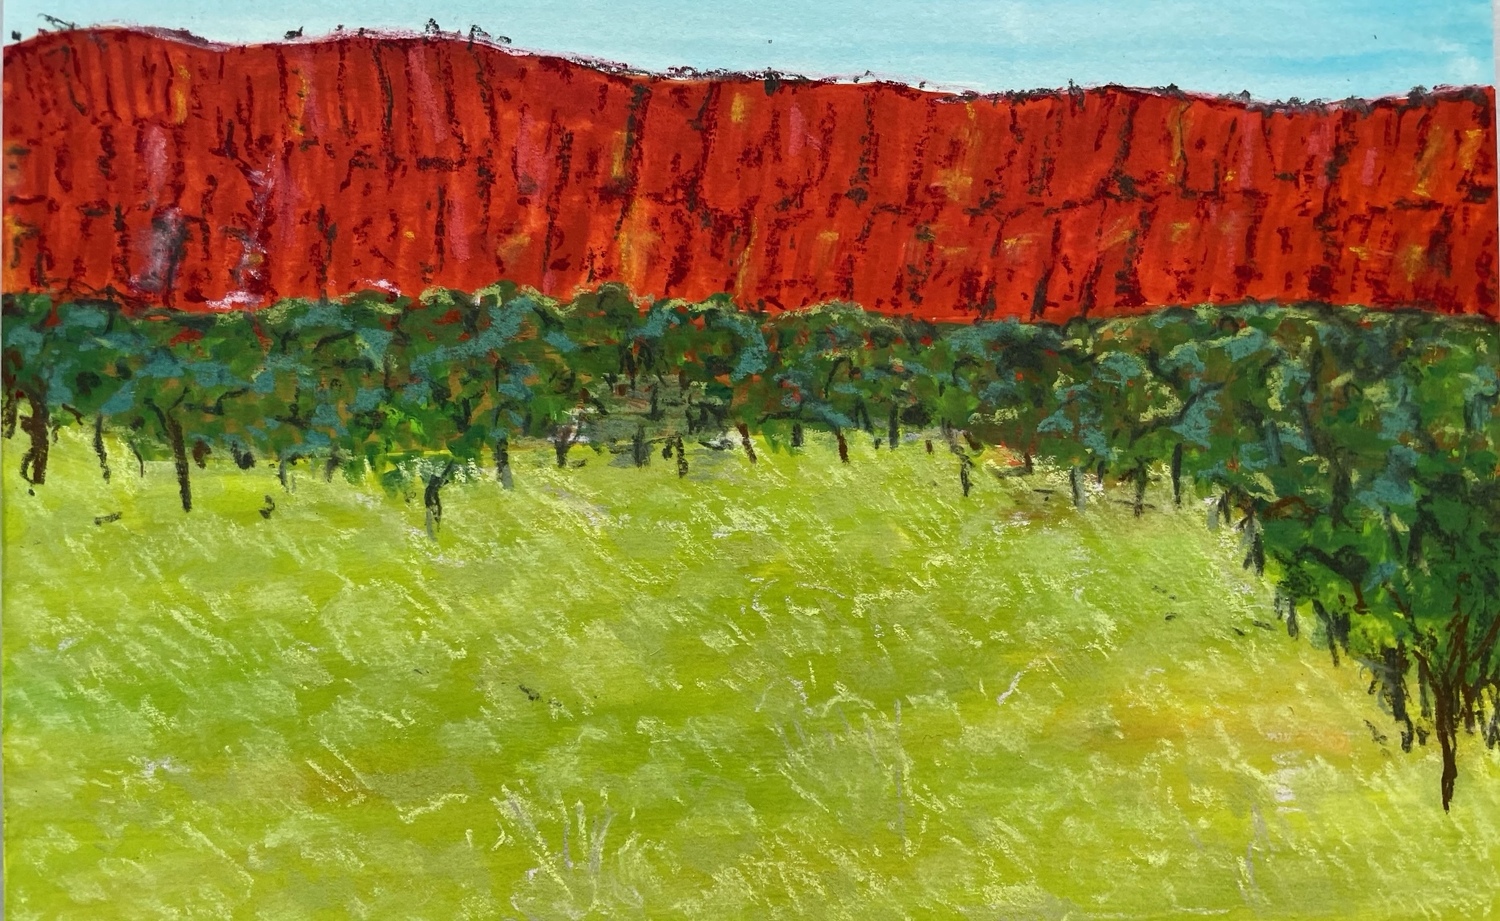 Kimberley Red Ranges